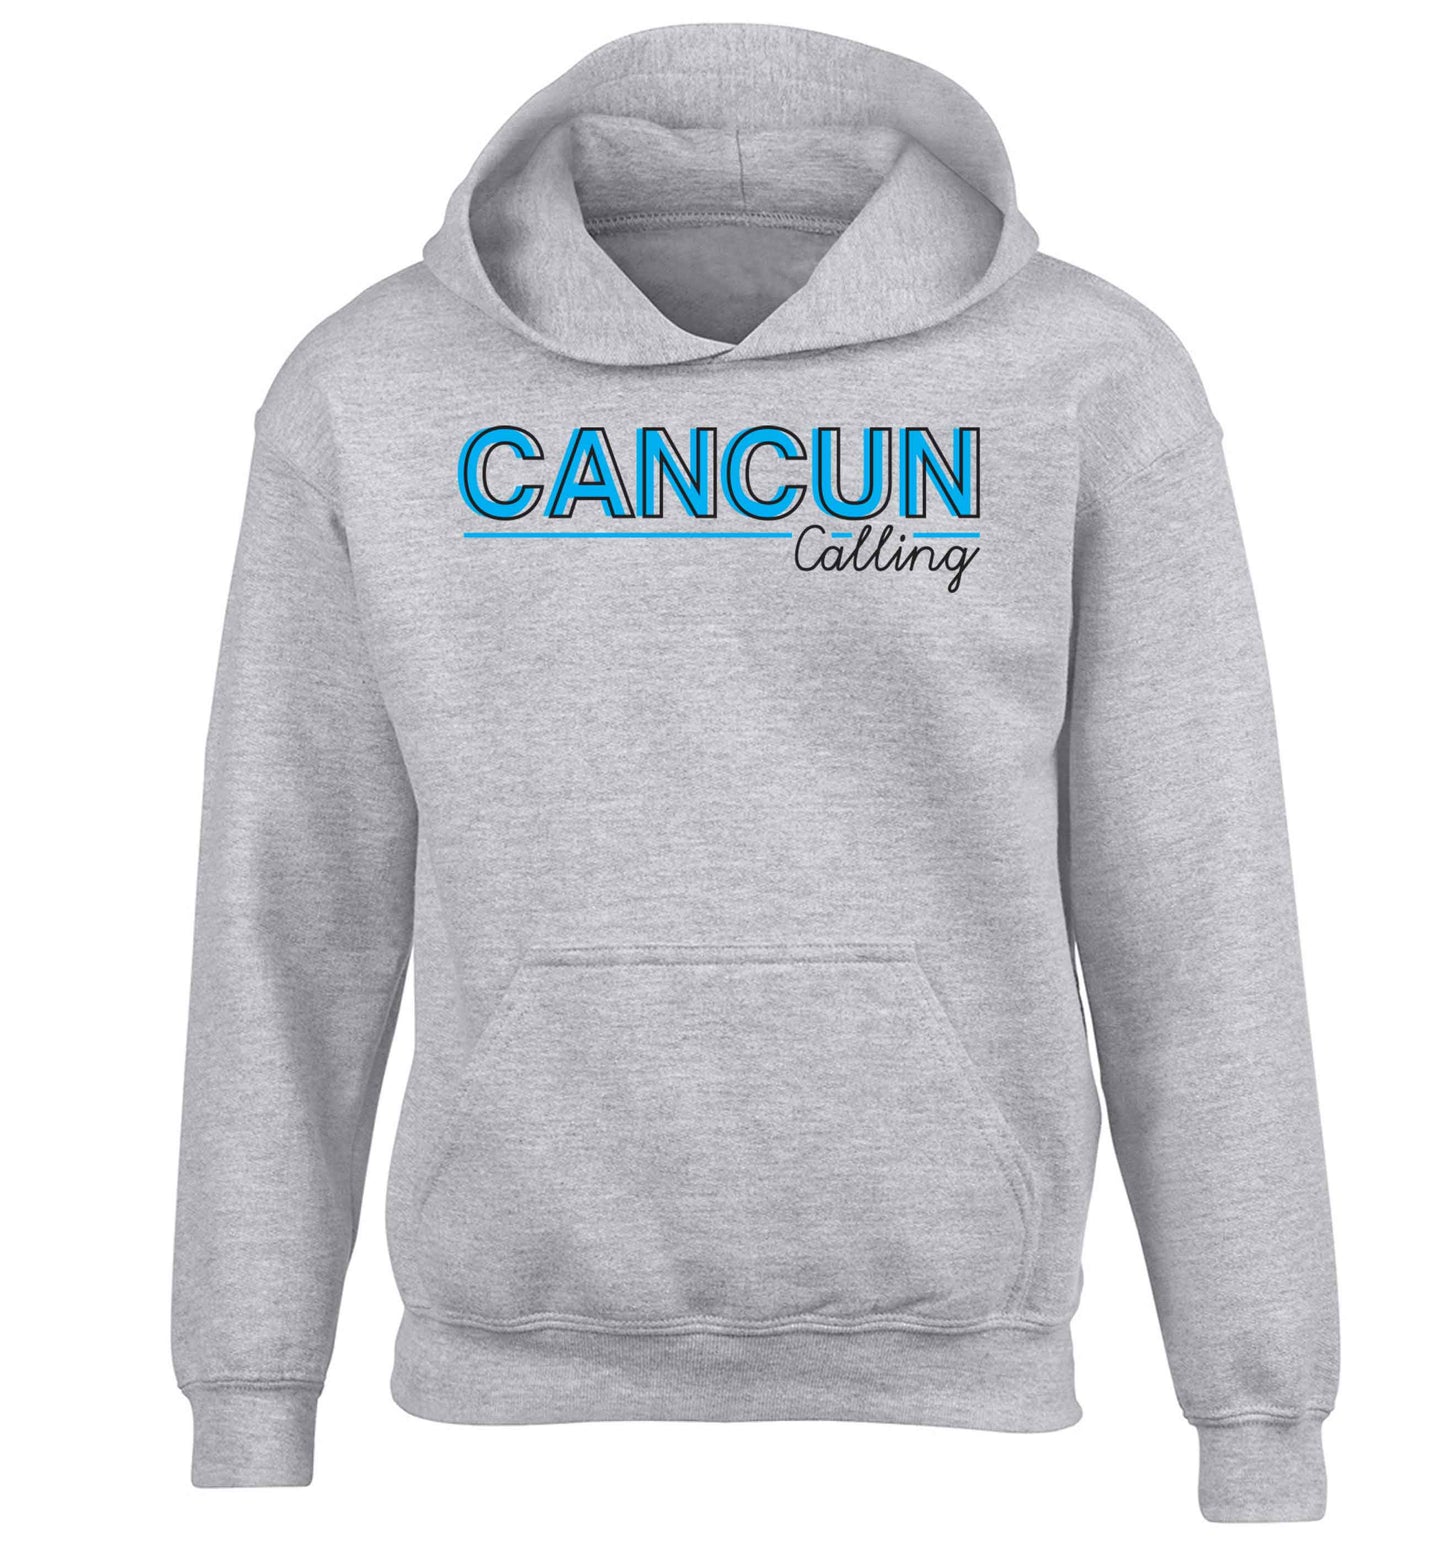 Cancun calling children's grey hoodie 12-13 Years